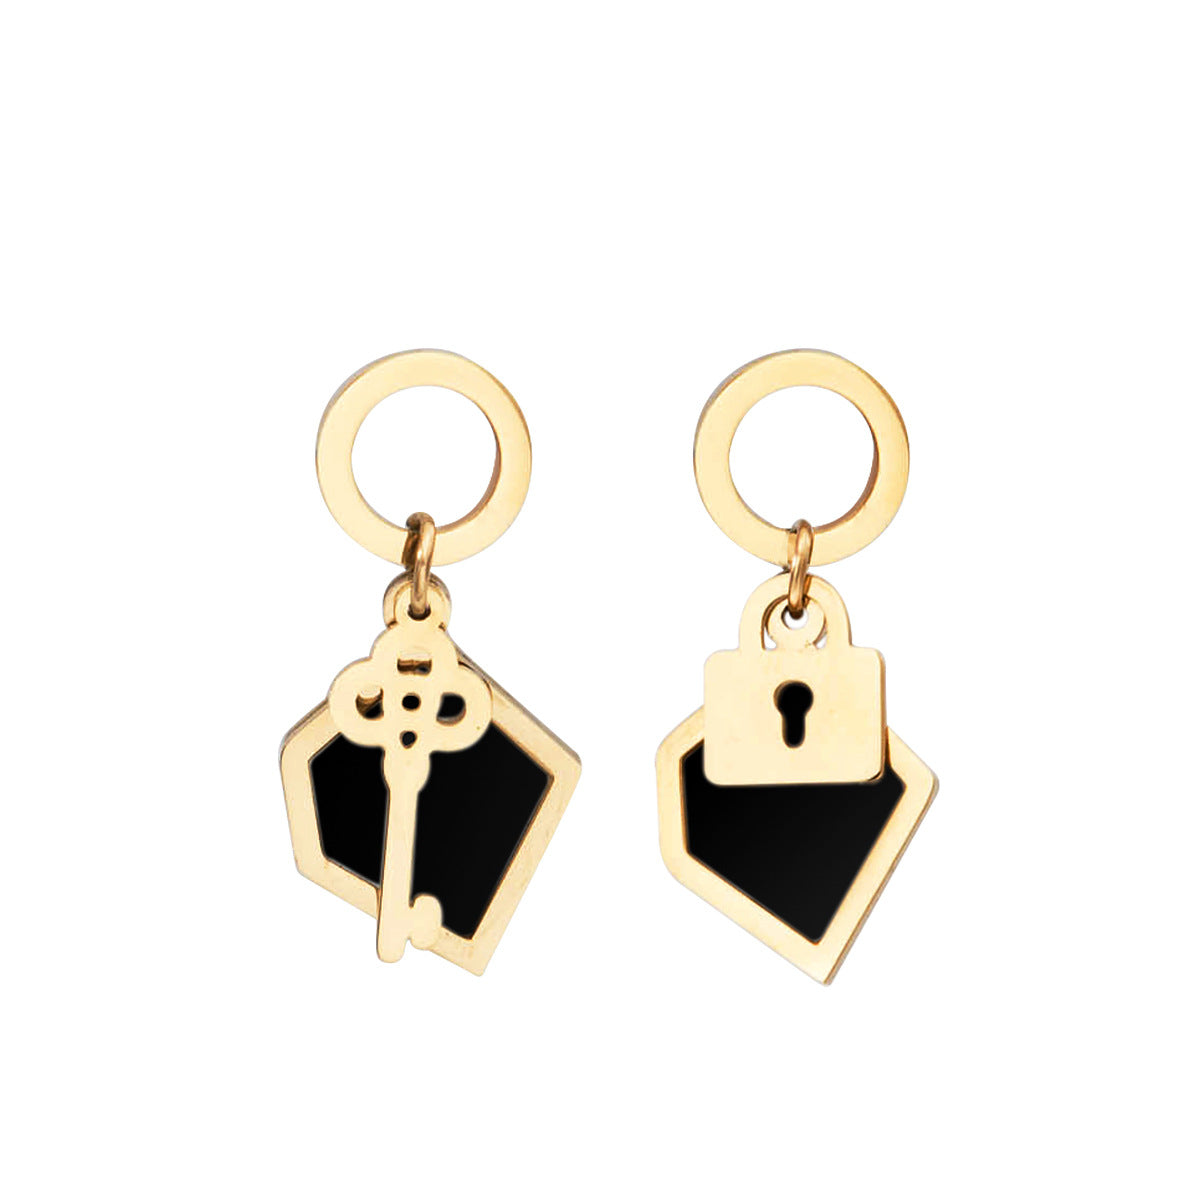 14K Gold Plated Black and White Key lock Titanium Steel Earrings